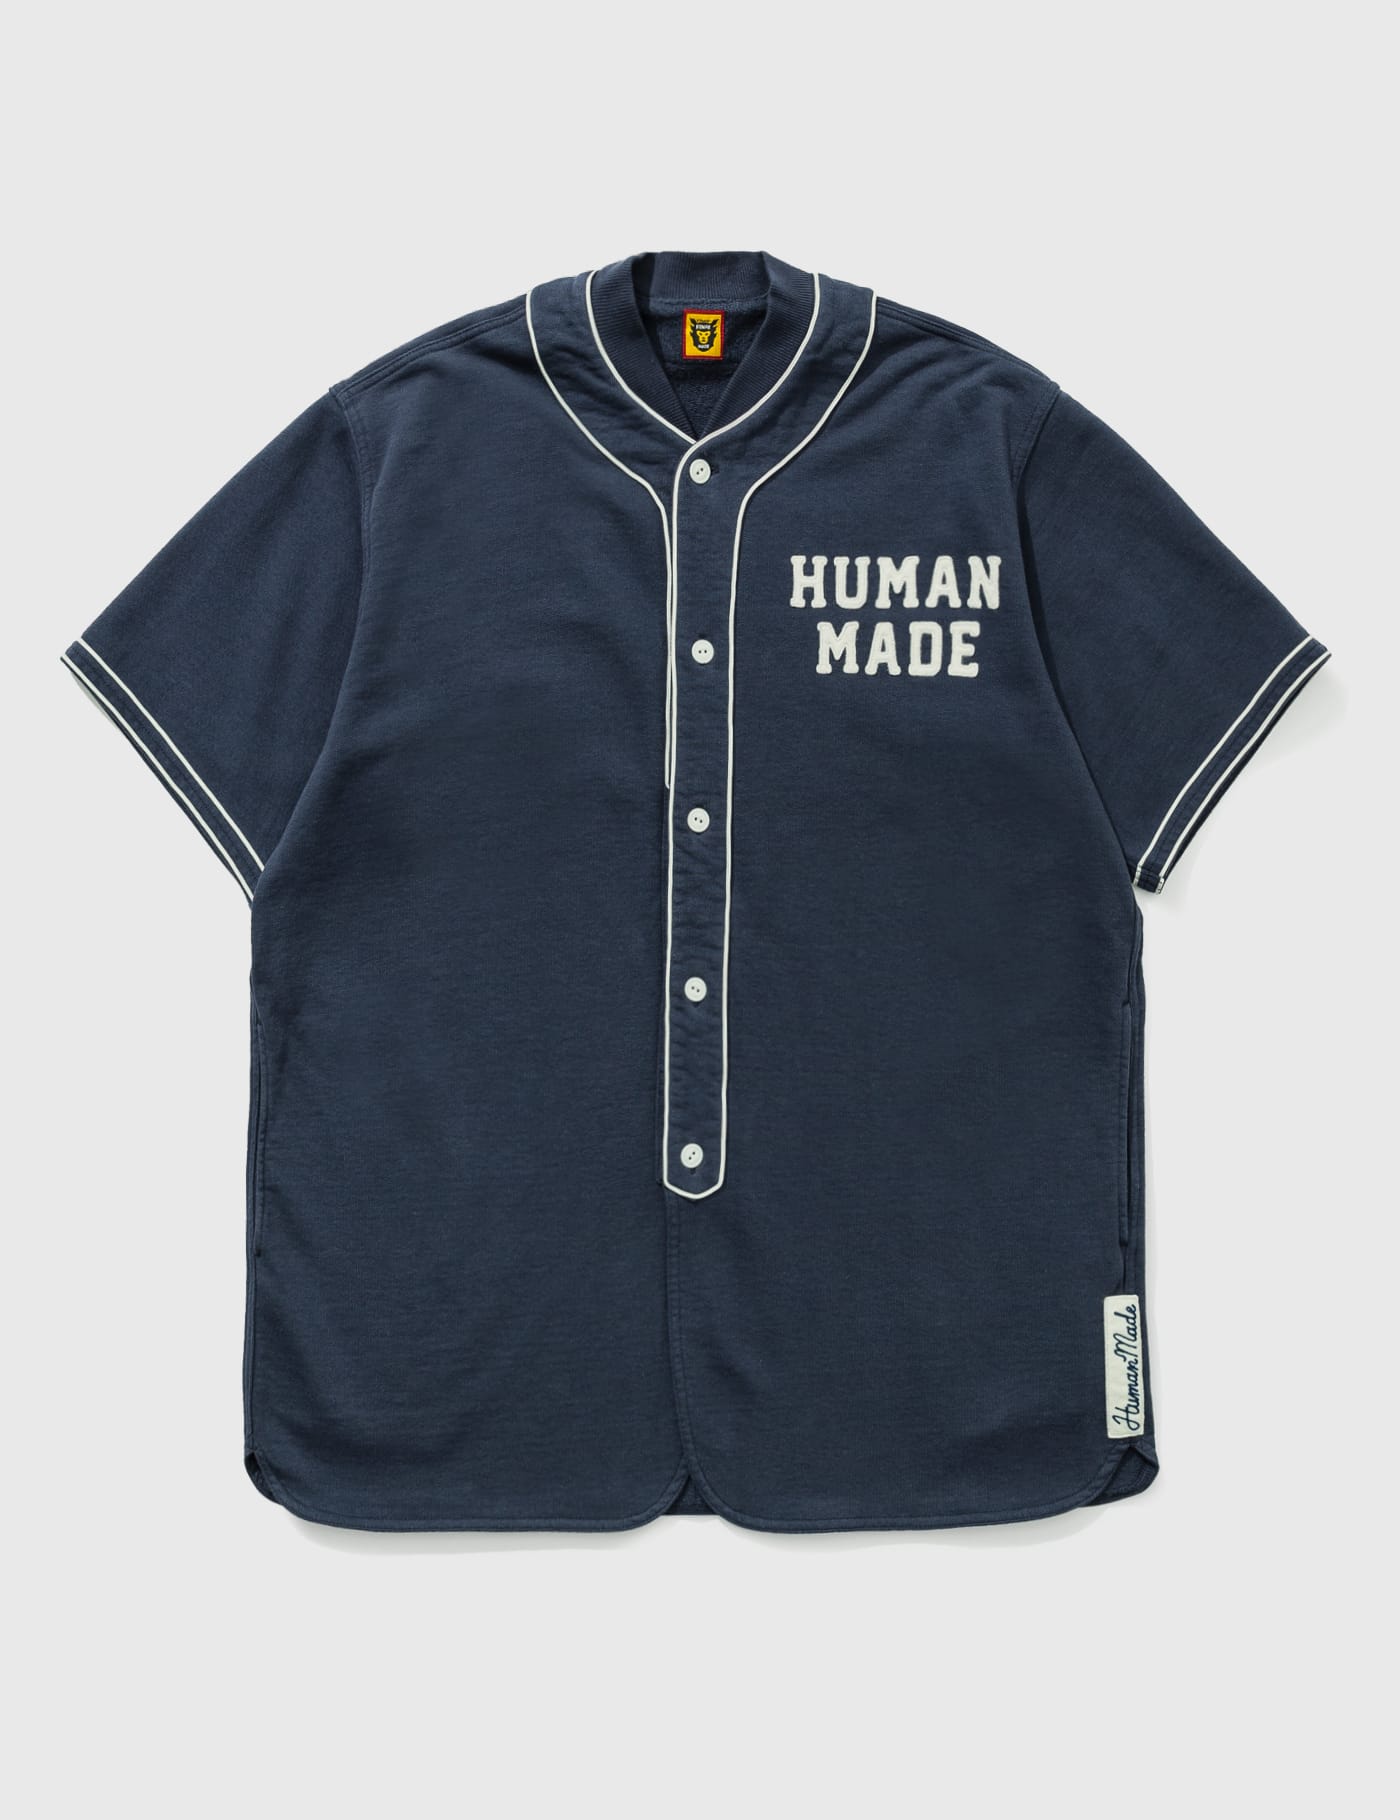 Human Made - Baseball Shirt | HBX - Globally Curated Fashion and 